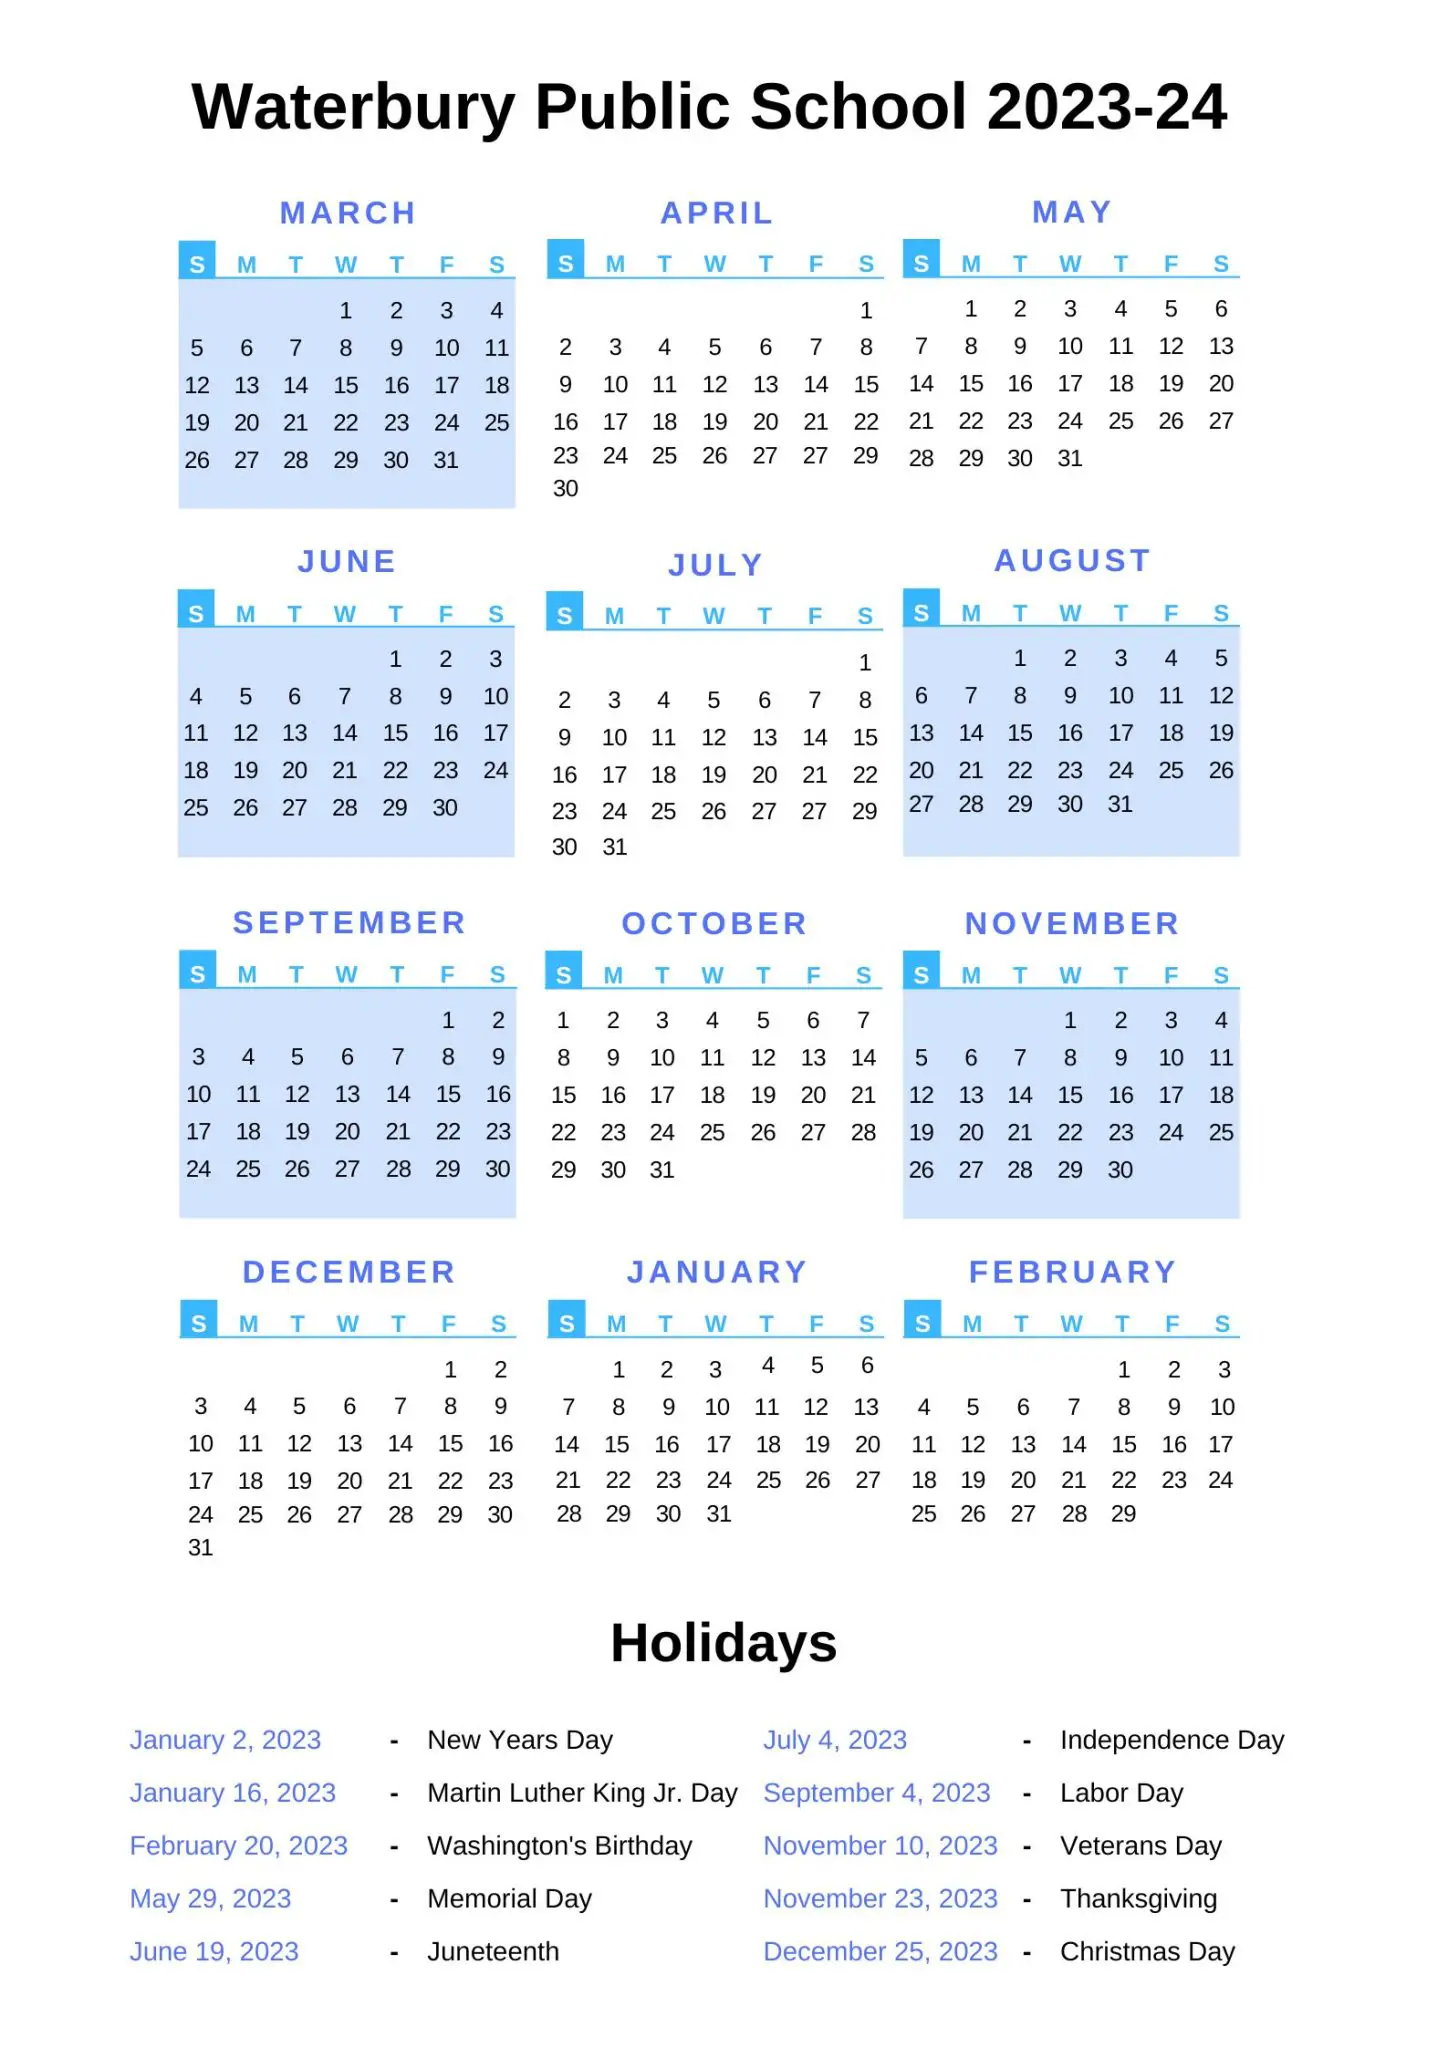 Waterbury Public Schools Calendar 202324 With Holidays